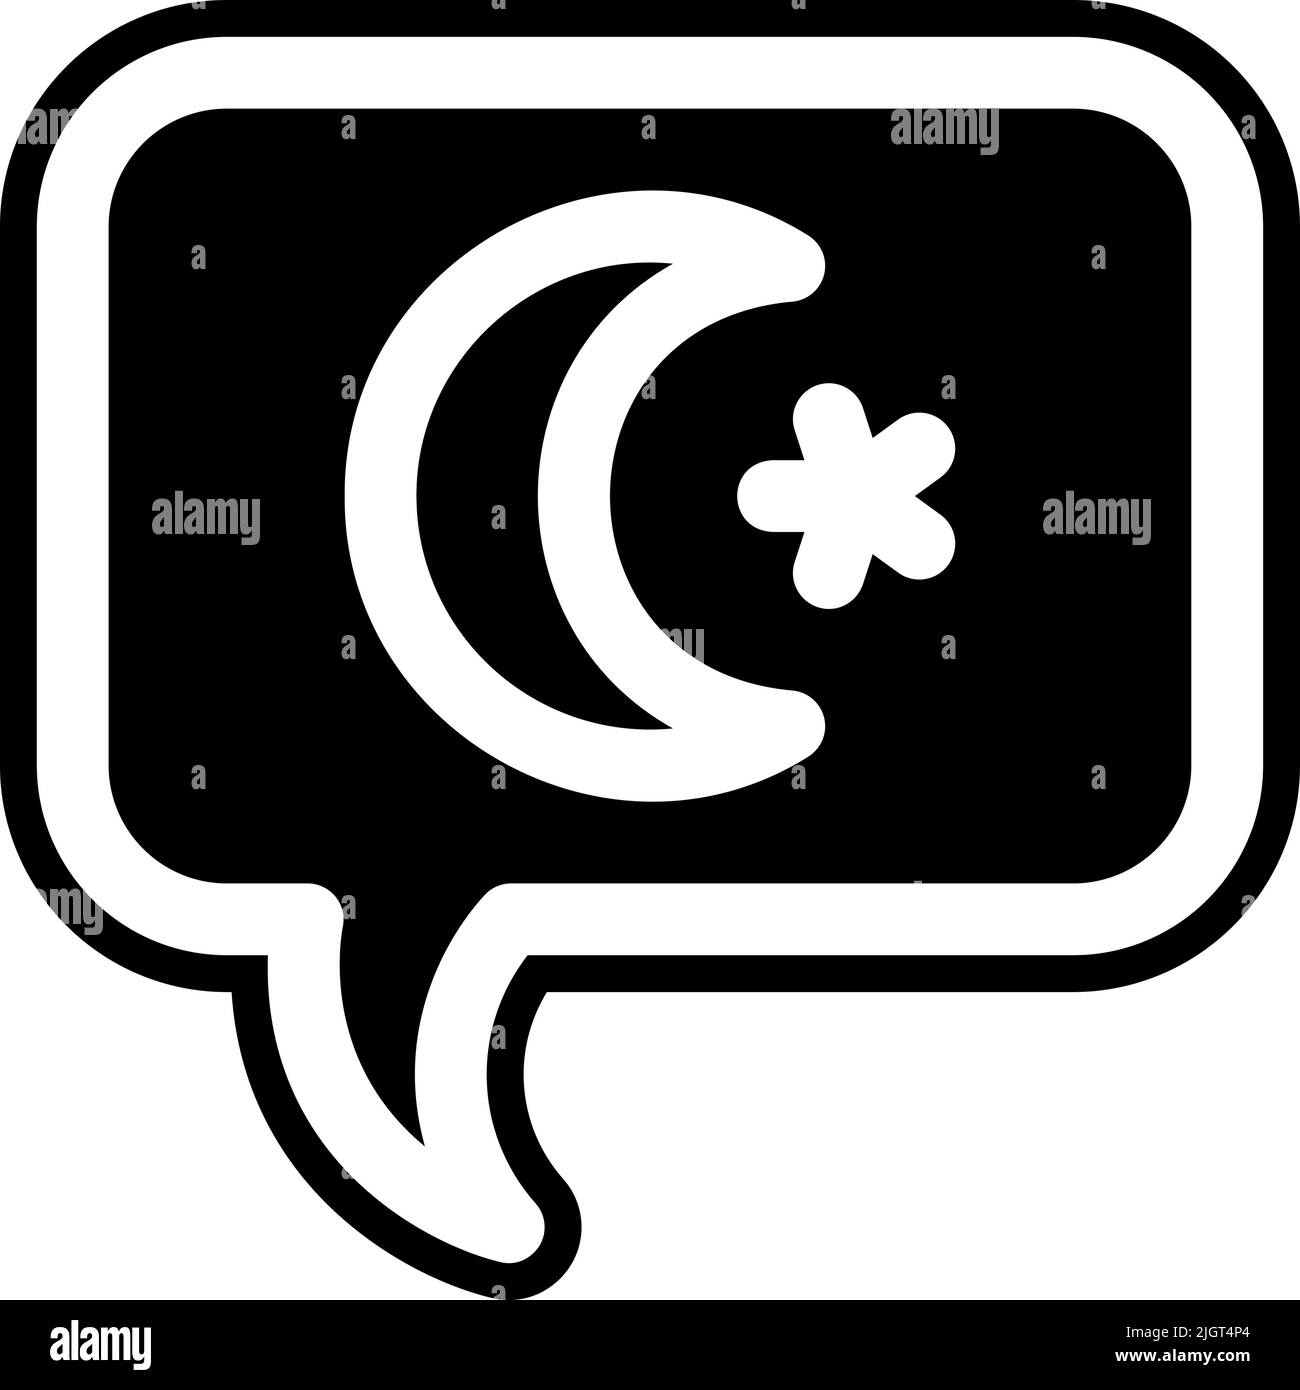 Ramadan crescent moon icon . Stock Vector